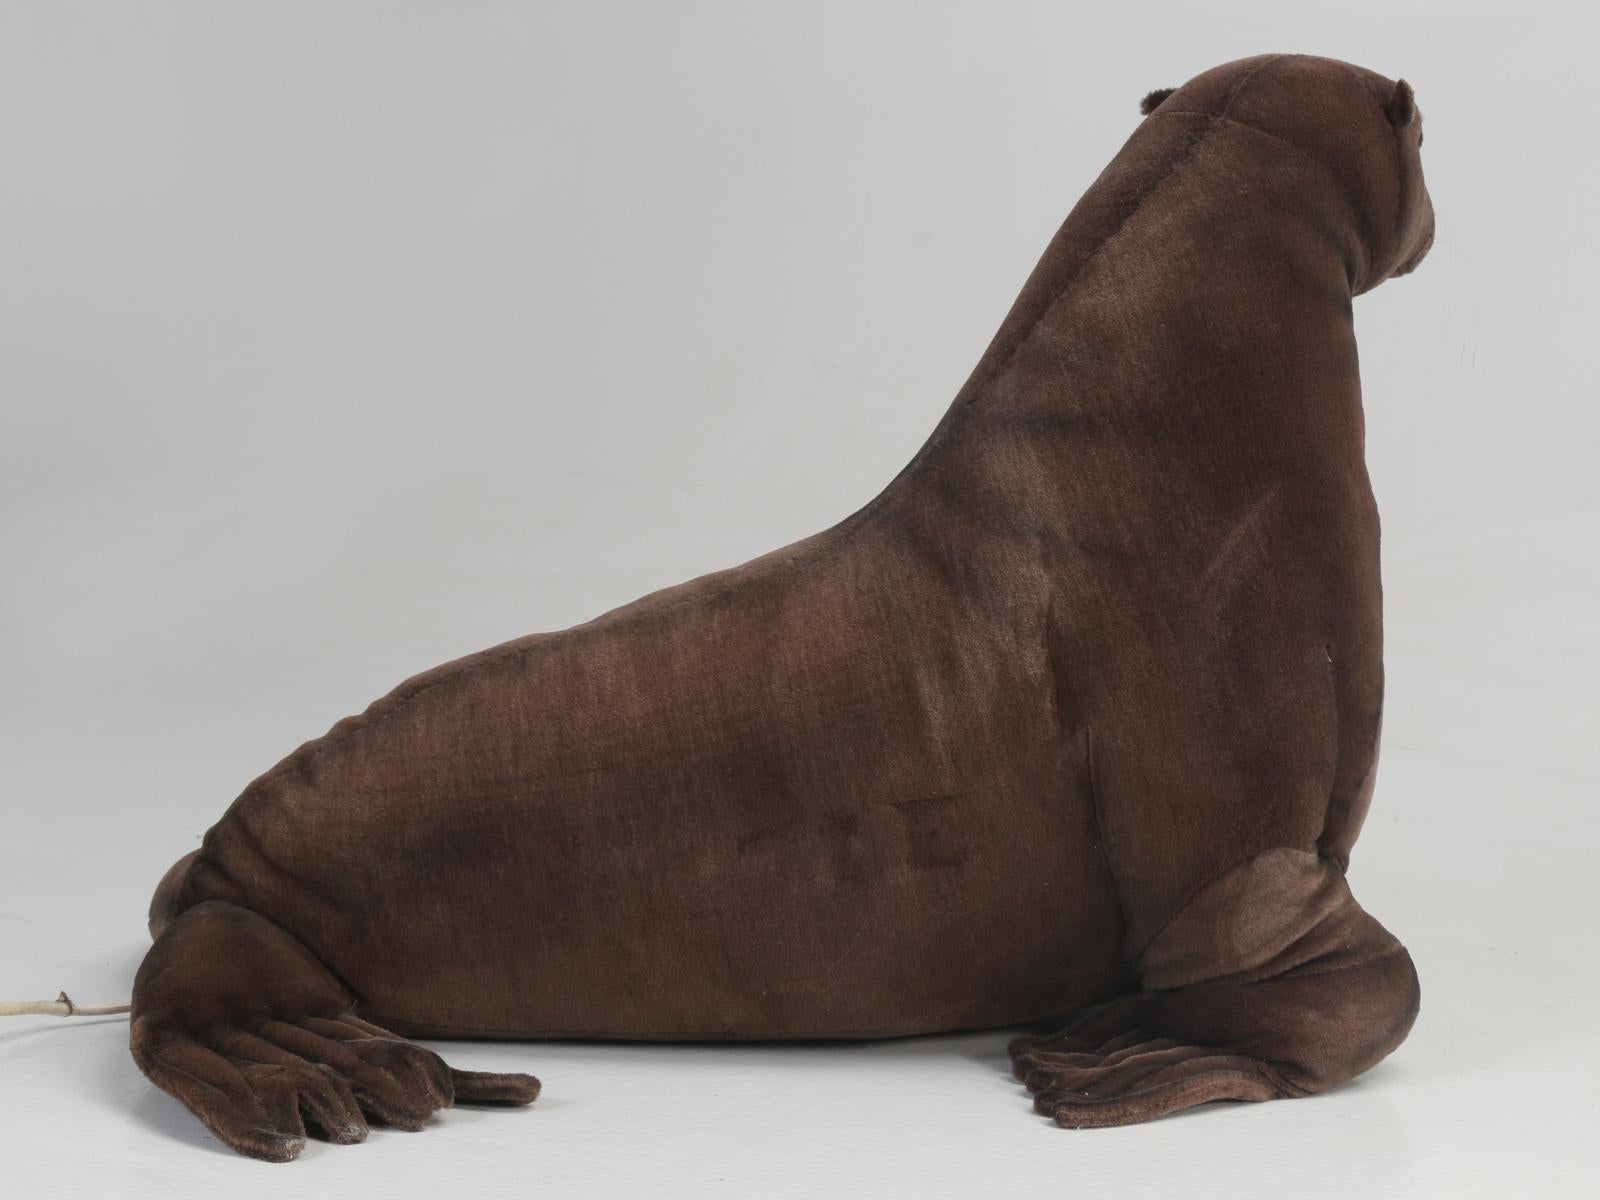 Hansa Stuffed Mechanical Seal Stuffed Animal 7